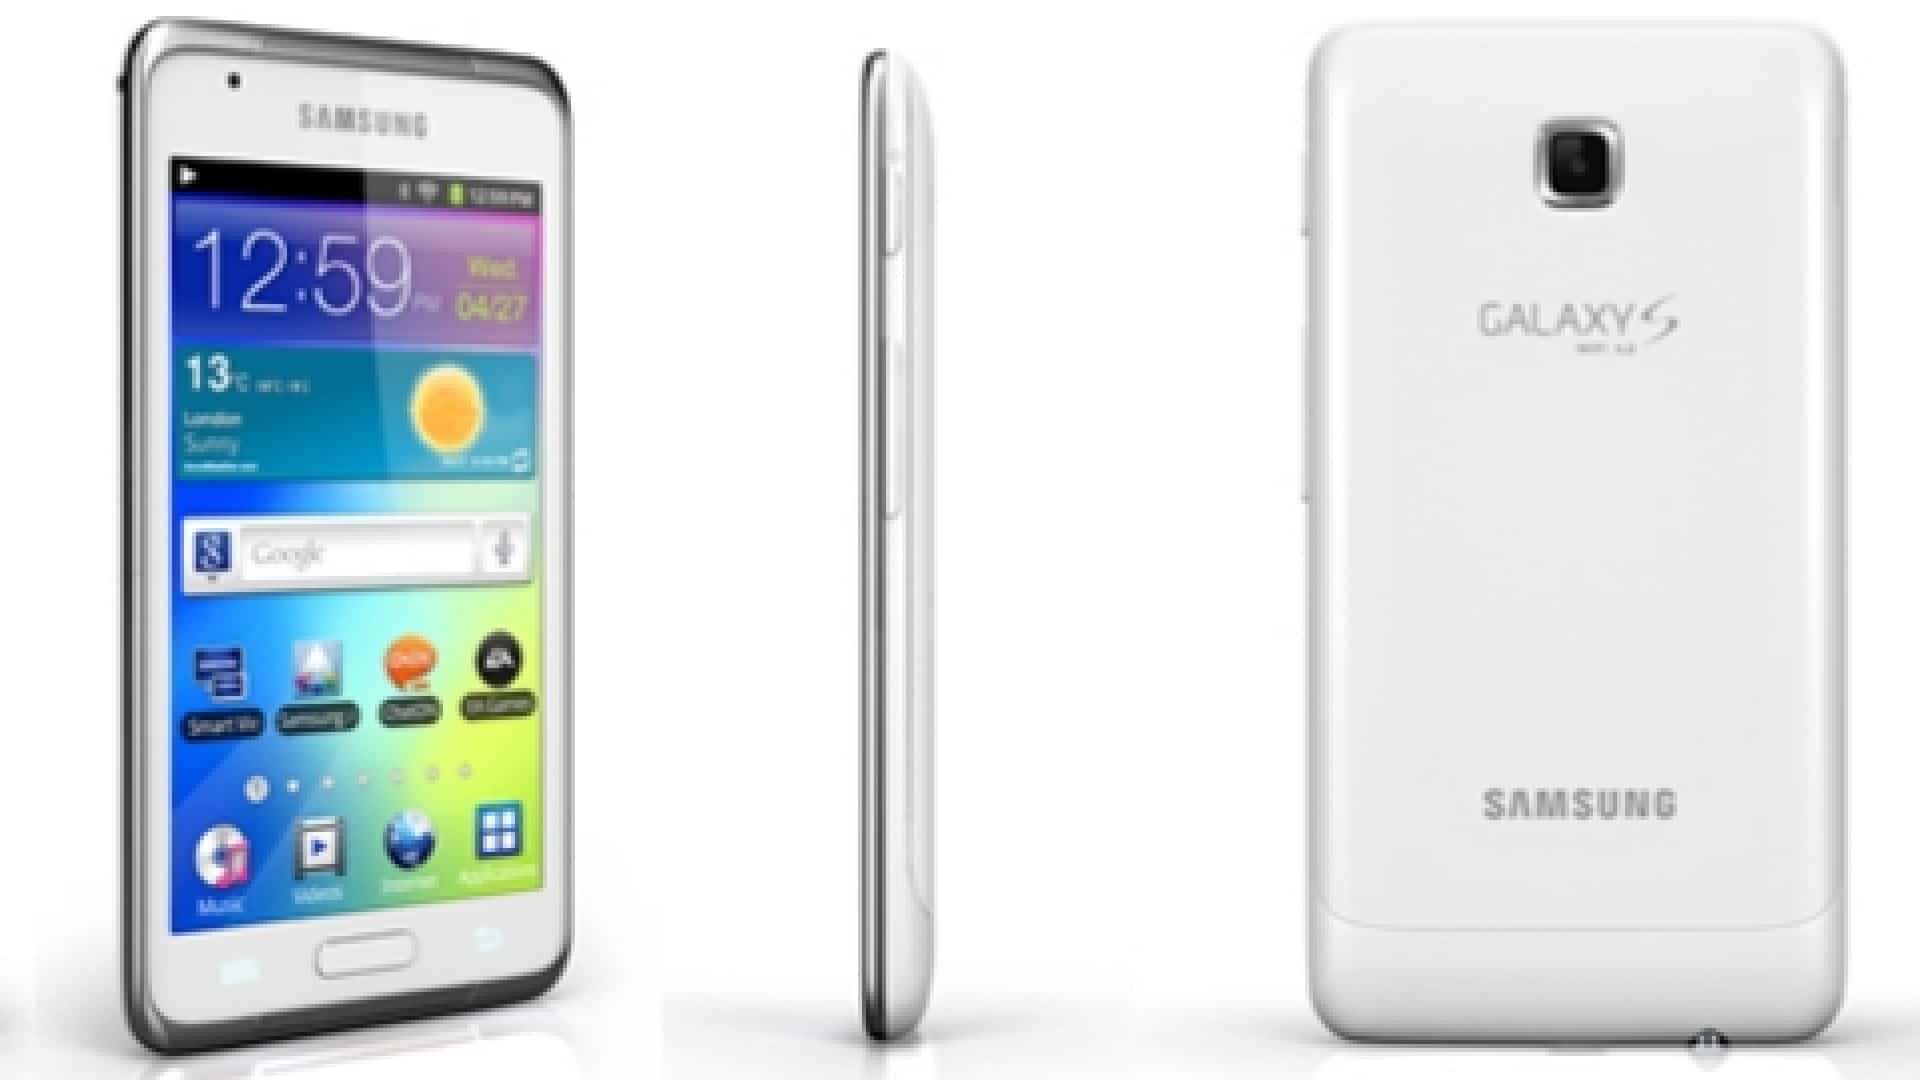 Samsung Galaxy S WiFi Review